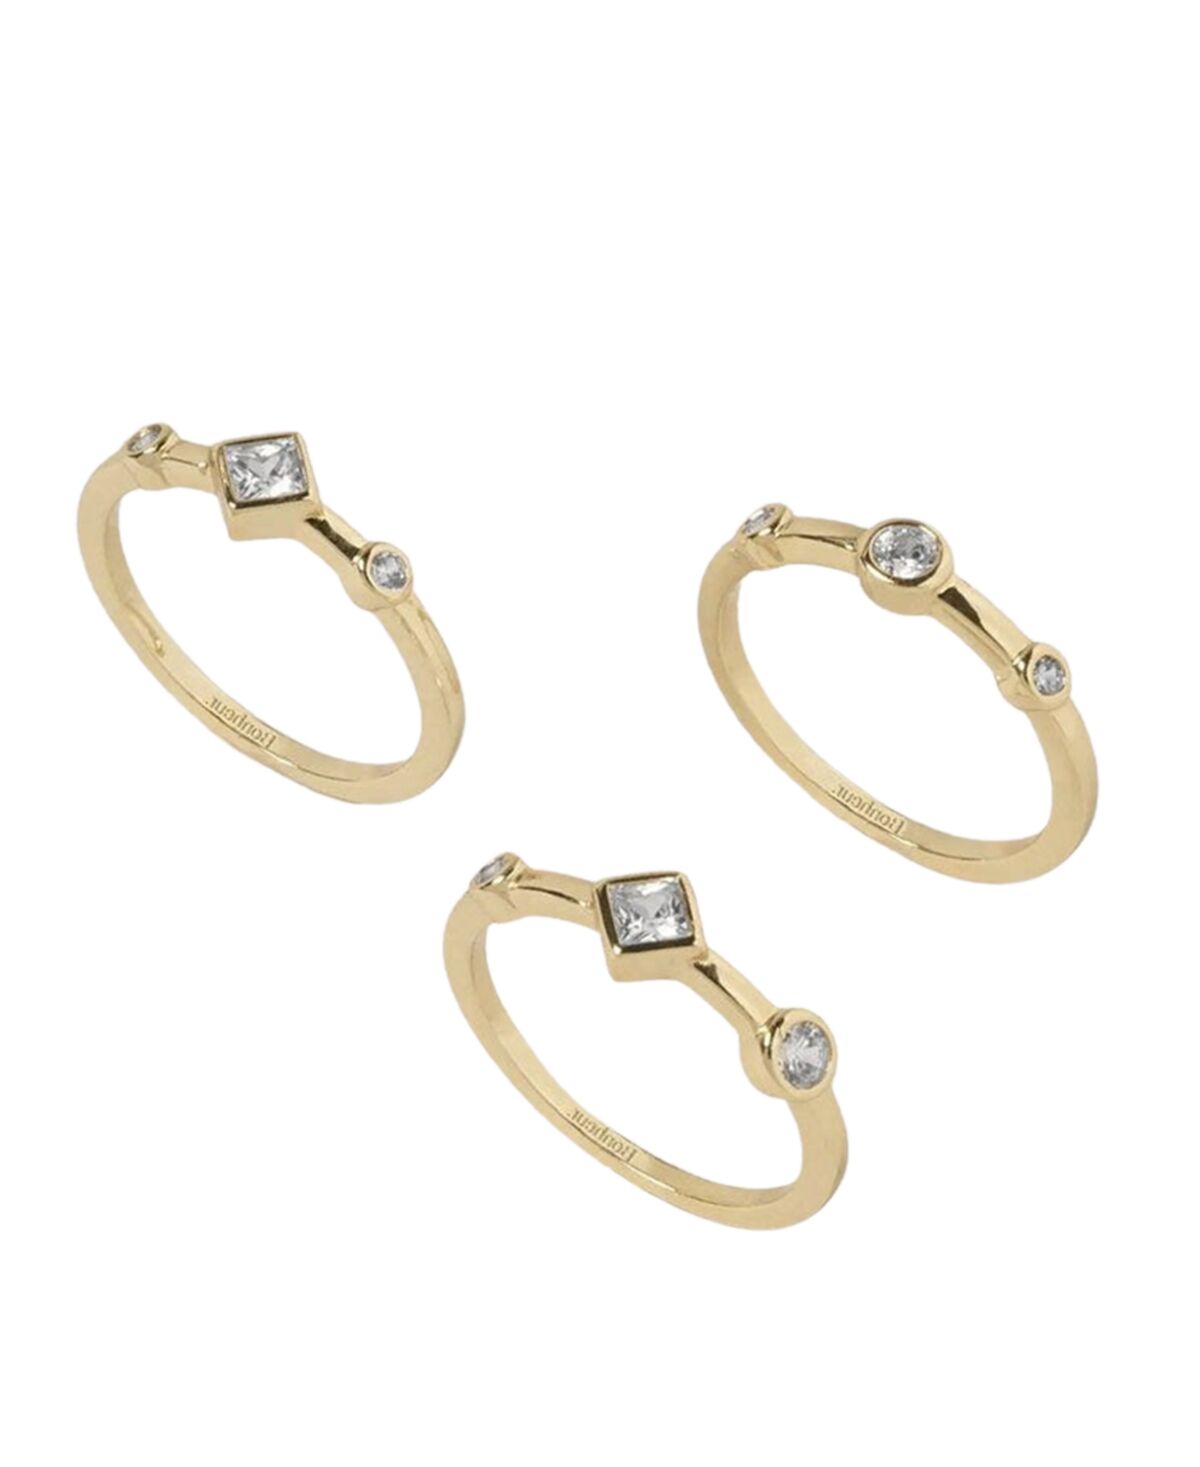 Bonheur Jewelry Bridgette Crystal Multi Bezel Stackable Rings Set 3 Pieces - Karat Micro Plated Gold Over Brass